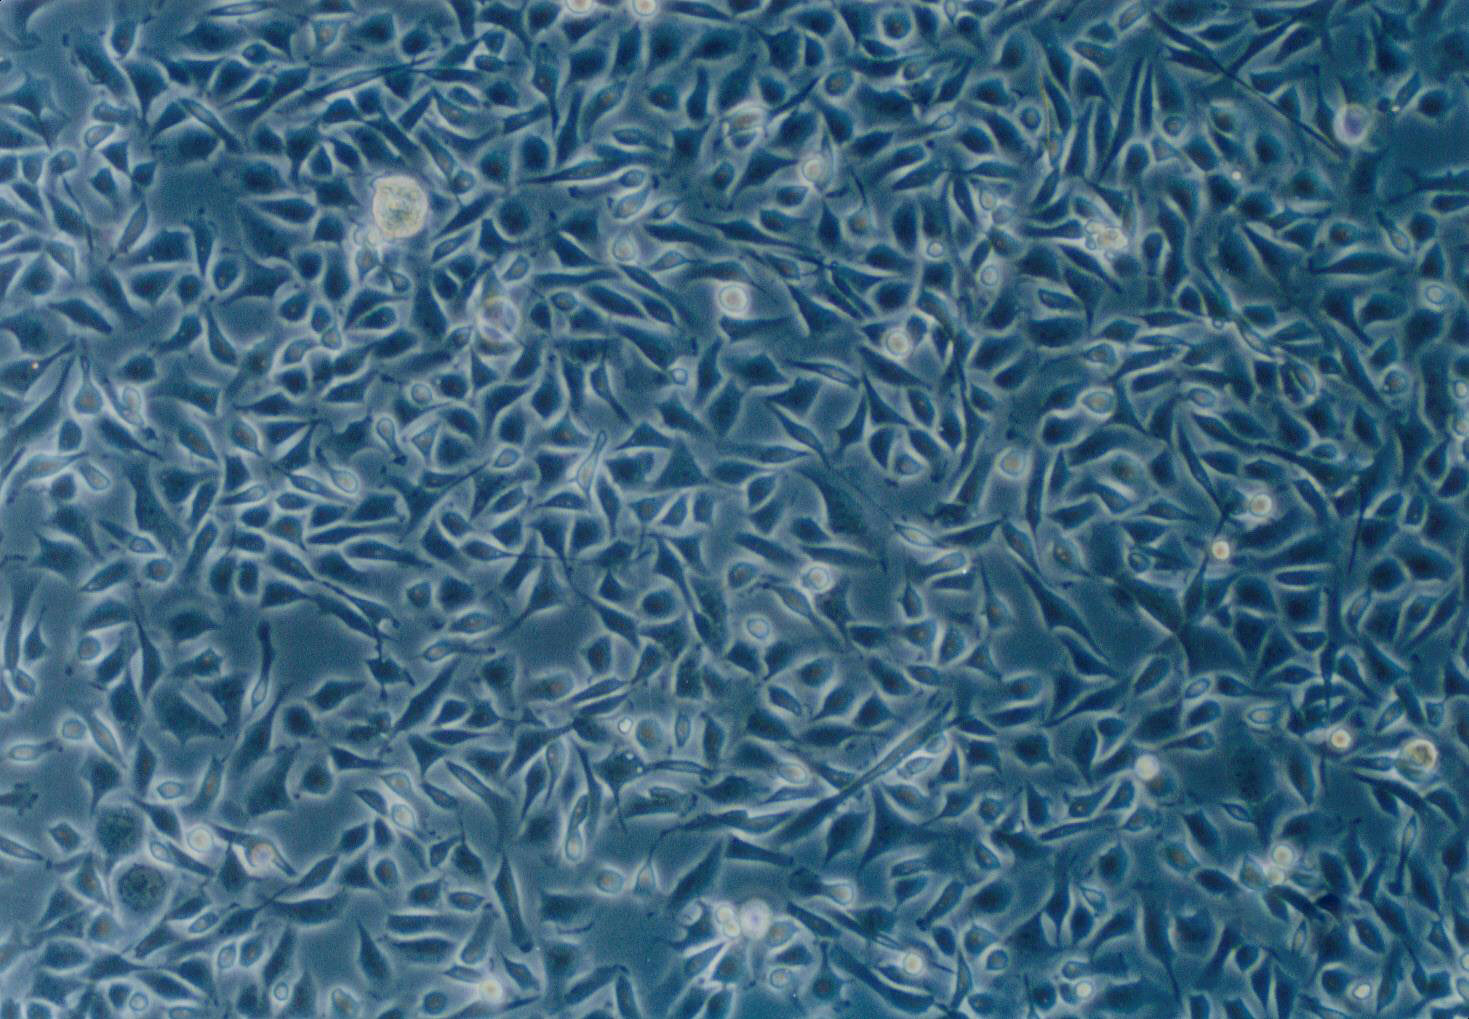 MZ-CRC-1 Cell|人髓样甲状腺癌细胞